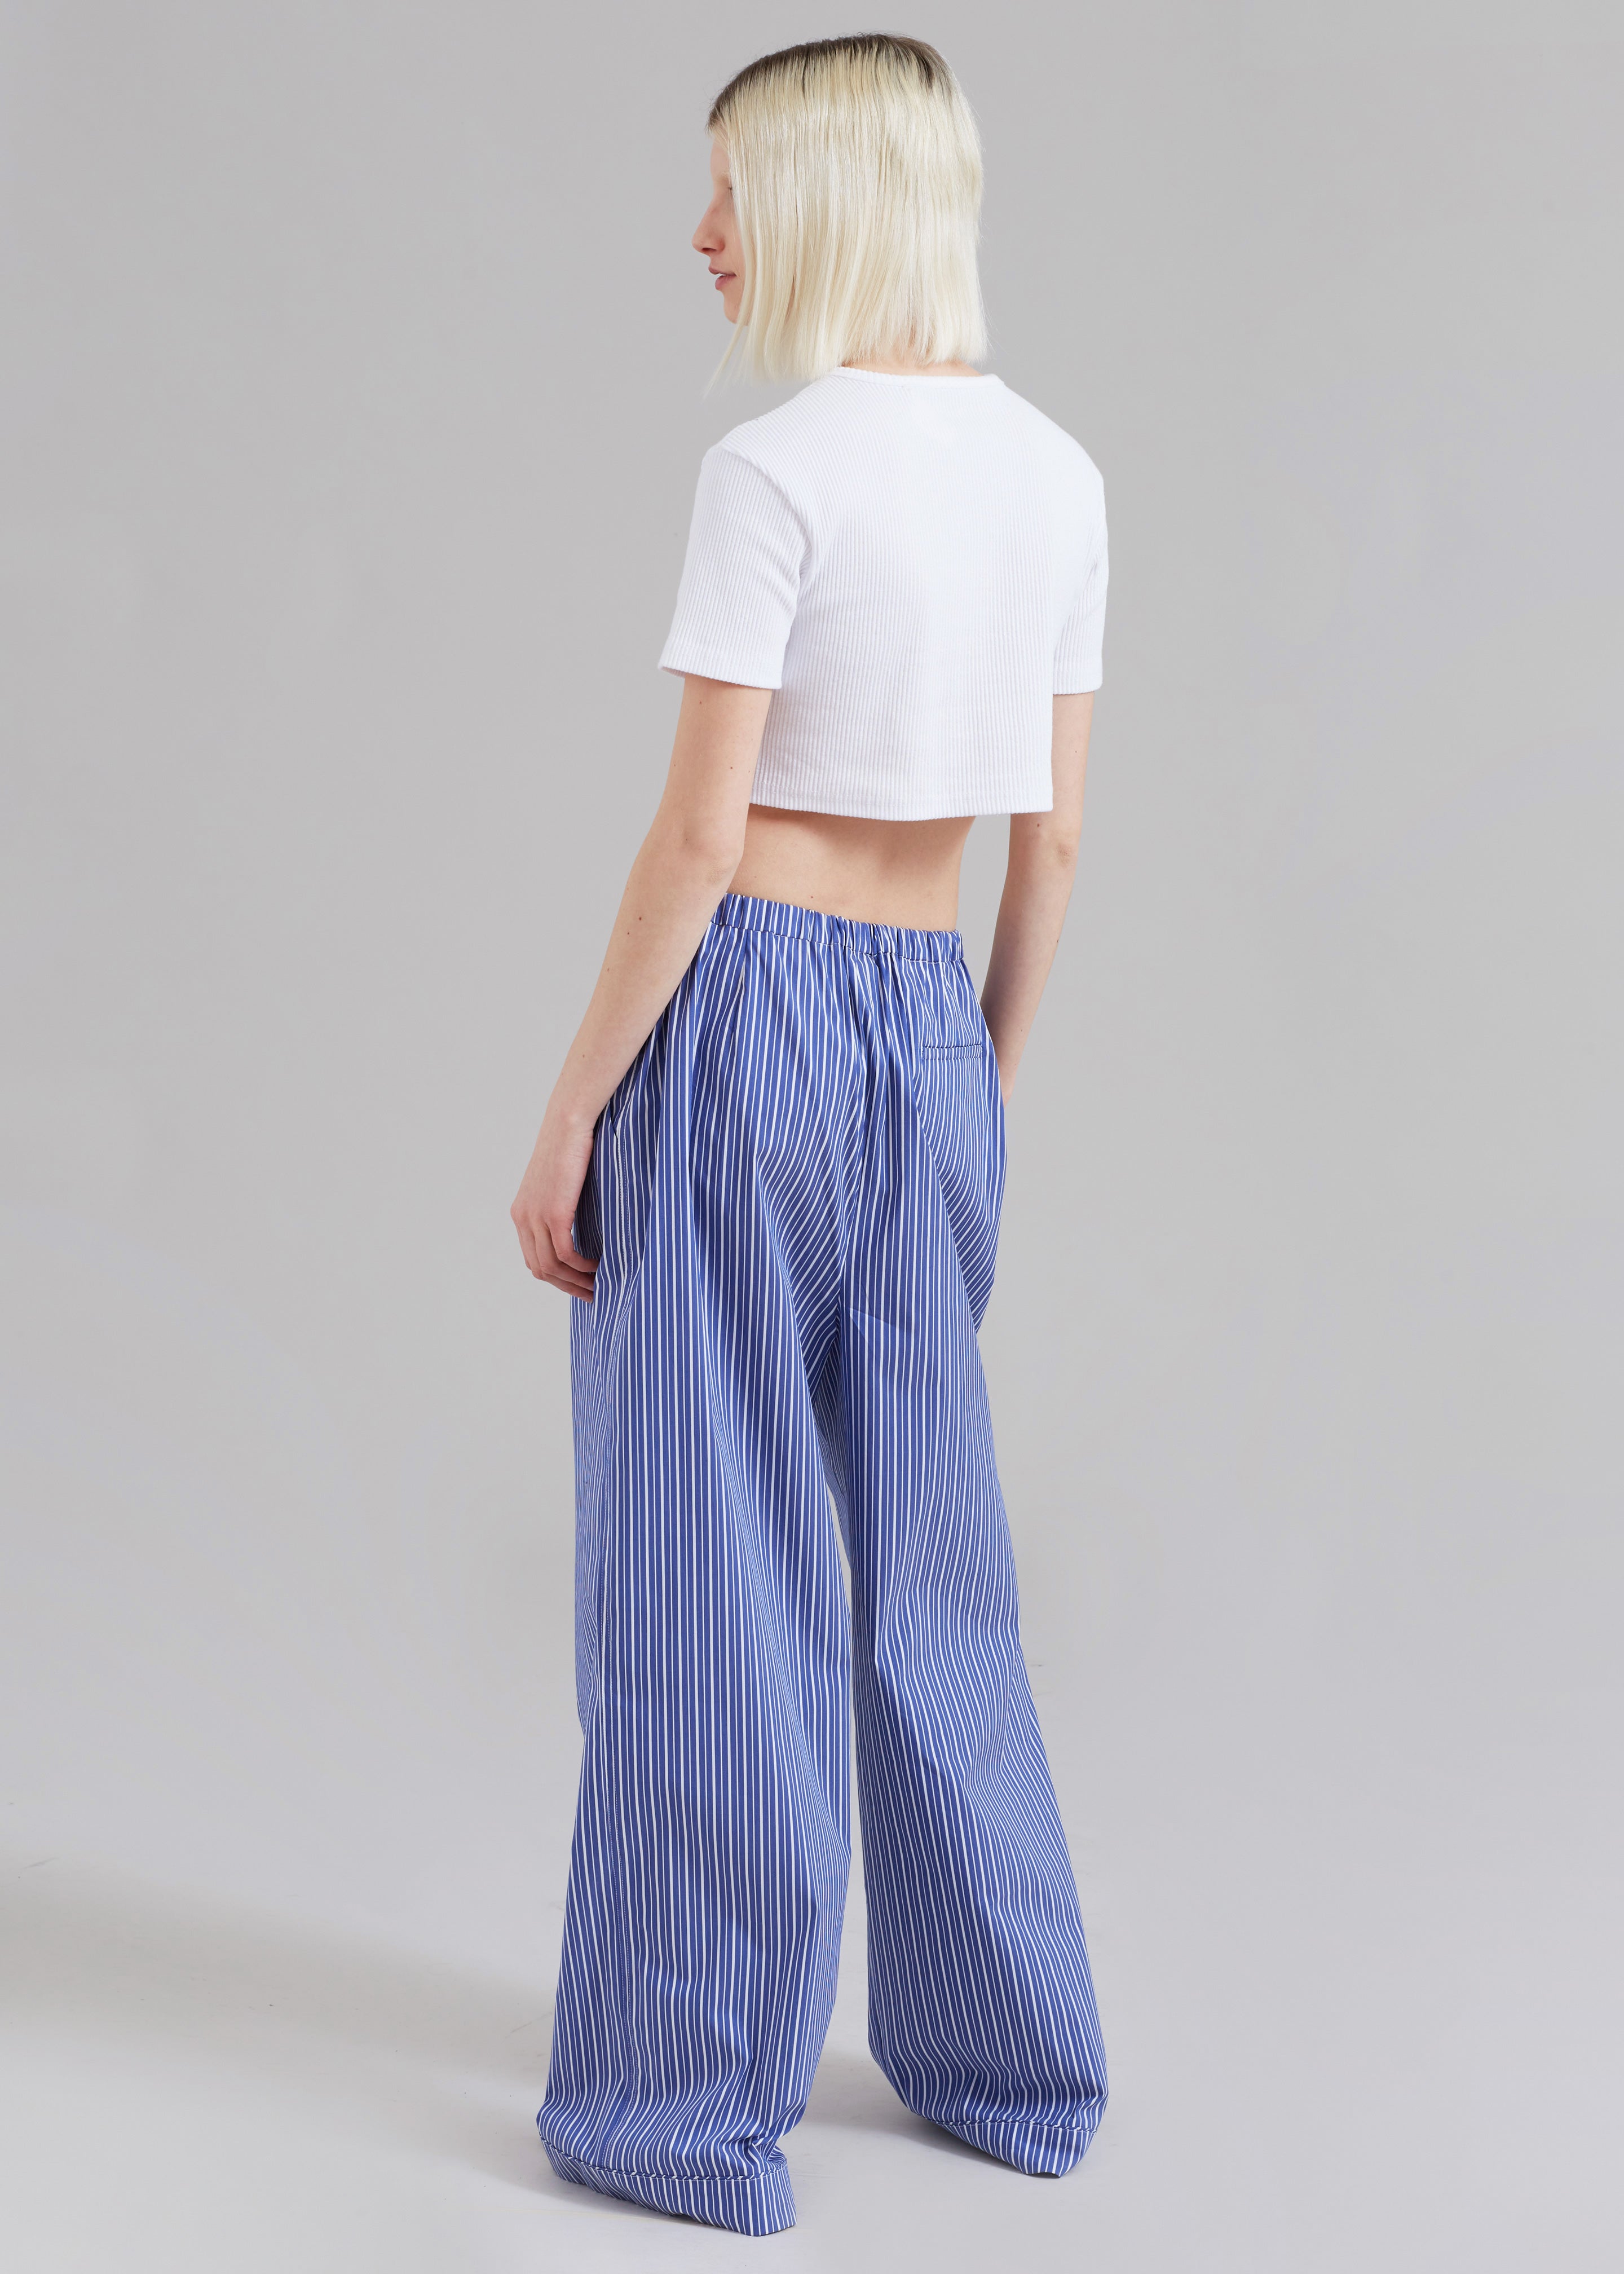 Tahari White Blue Stripe Linen Pants Trousers Straight Leg High Rise Size  Large | eBay